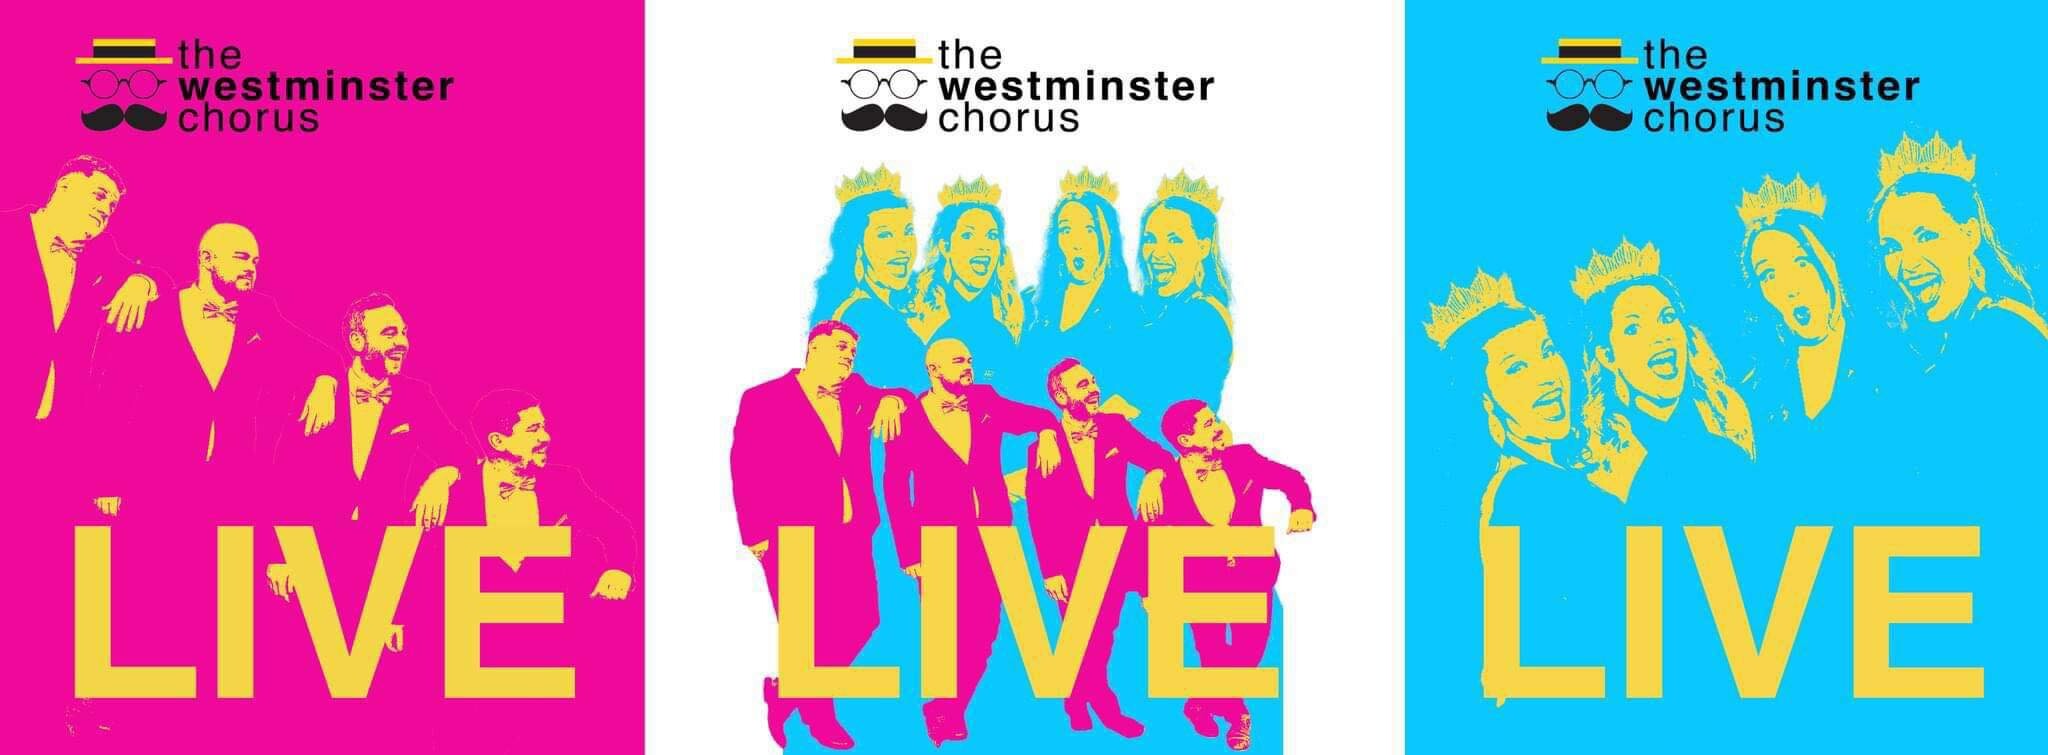 westminster live